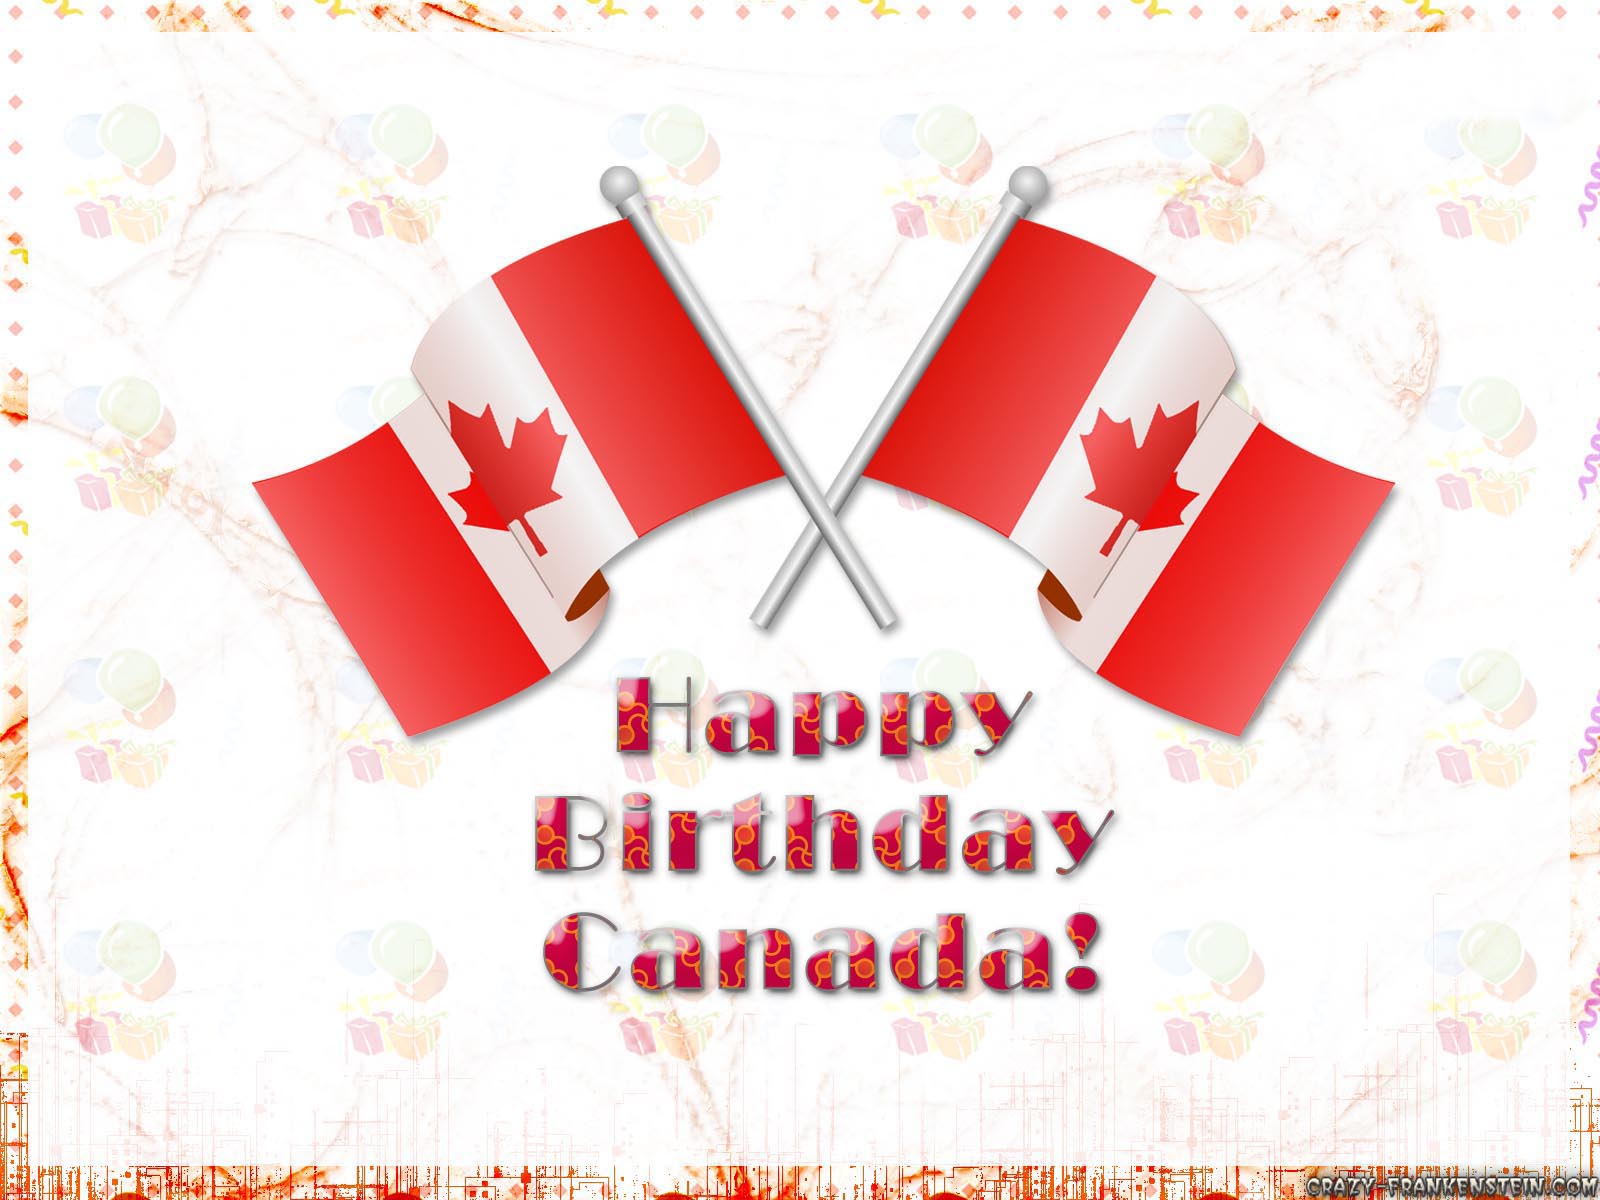 Happy birthday canada flags cross